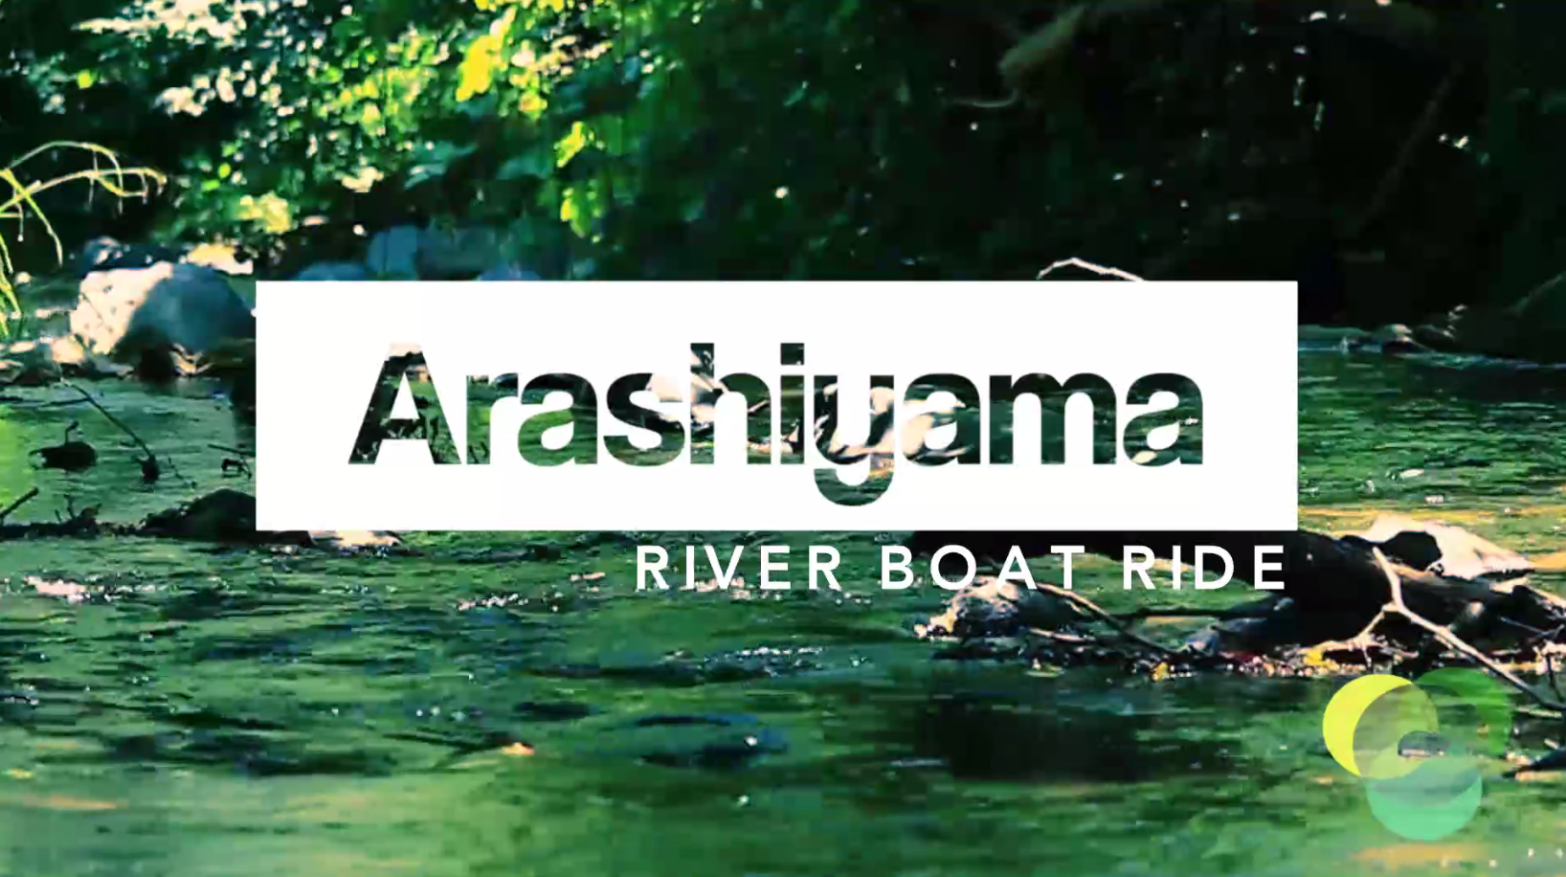 Kyoto river boat ride adventure by Content Catnip TV